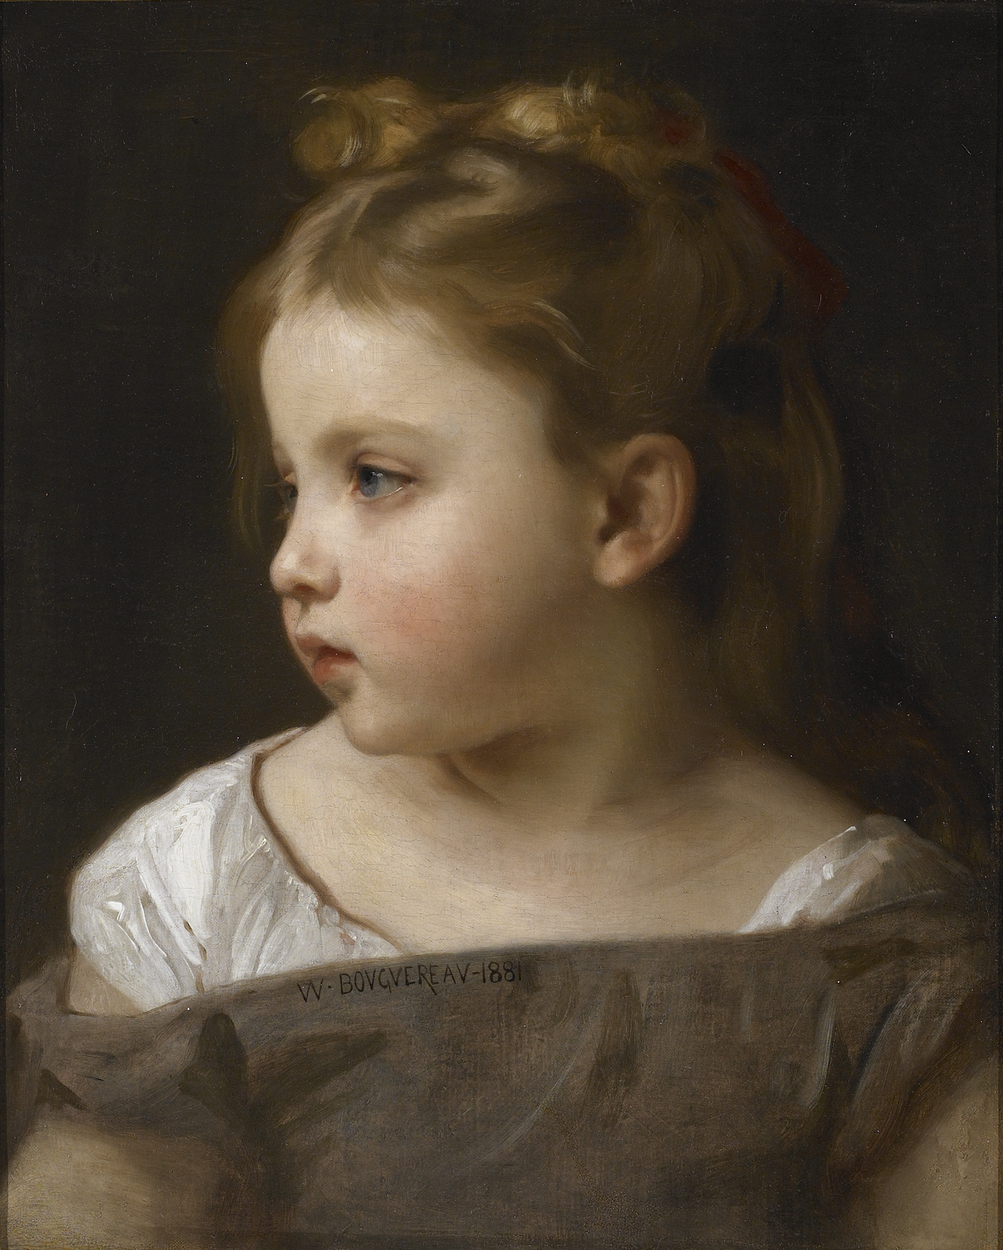 William+Adolphe+Bouguereau-1825-1905 (116).jpg